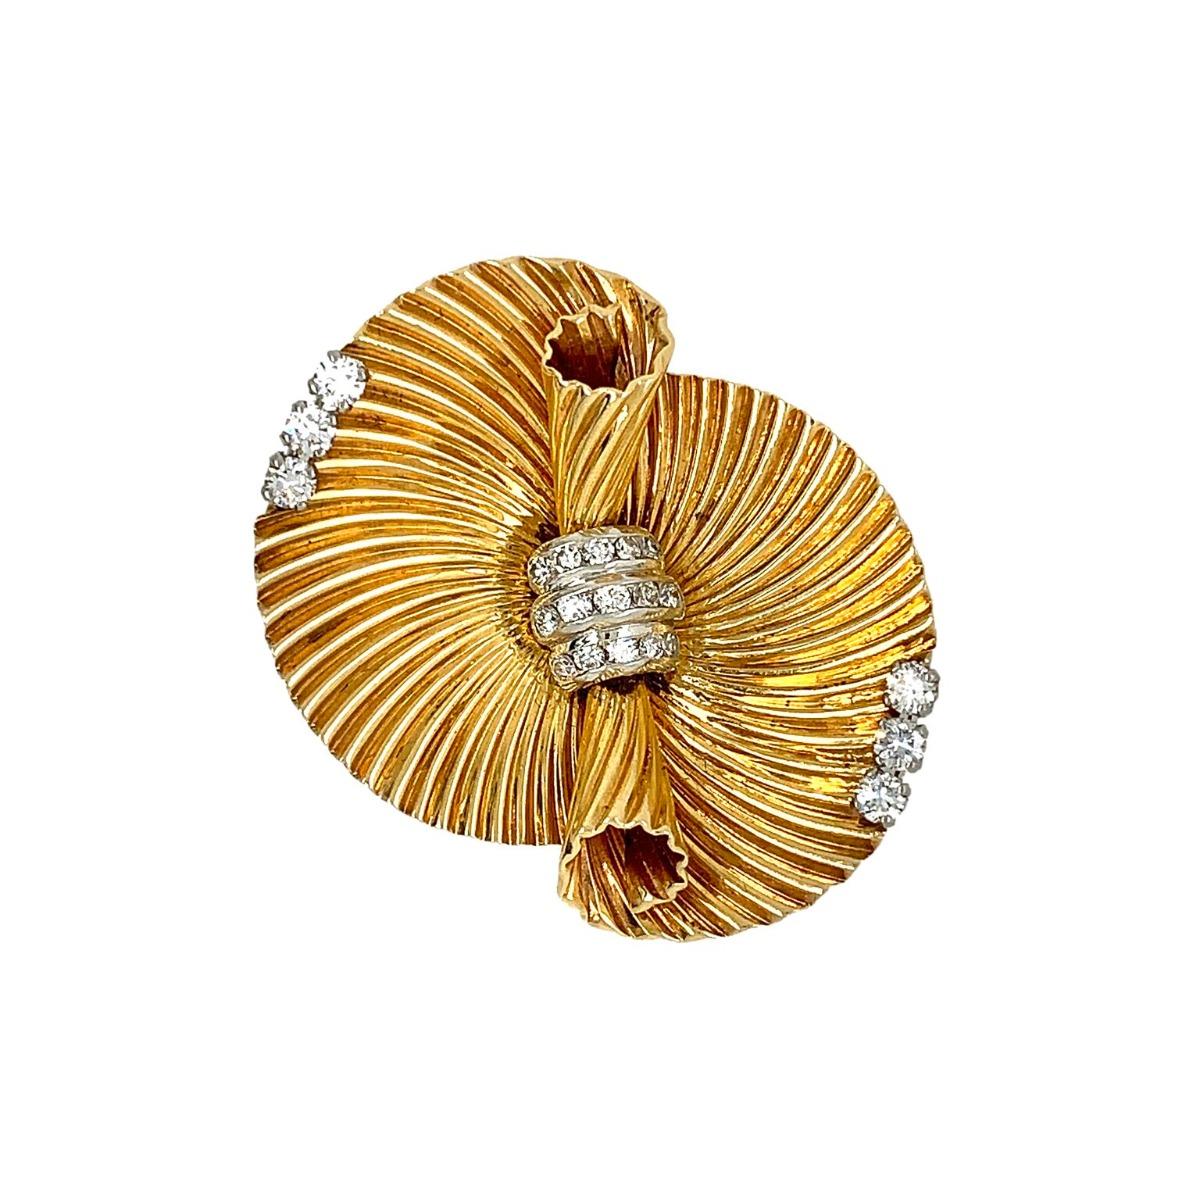 Brand: Cartier
Metal: 14k Yellow Gold
Year Of Manufacture: 1940s
Gemstone: Diamond
Diamonds Used: 21
Diamond Weight: 0.60 CT
Total Weight: 15.5 grams